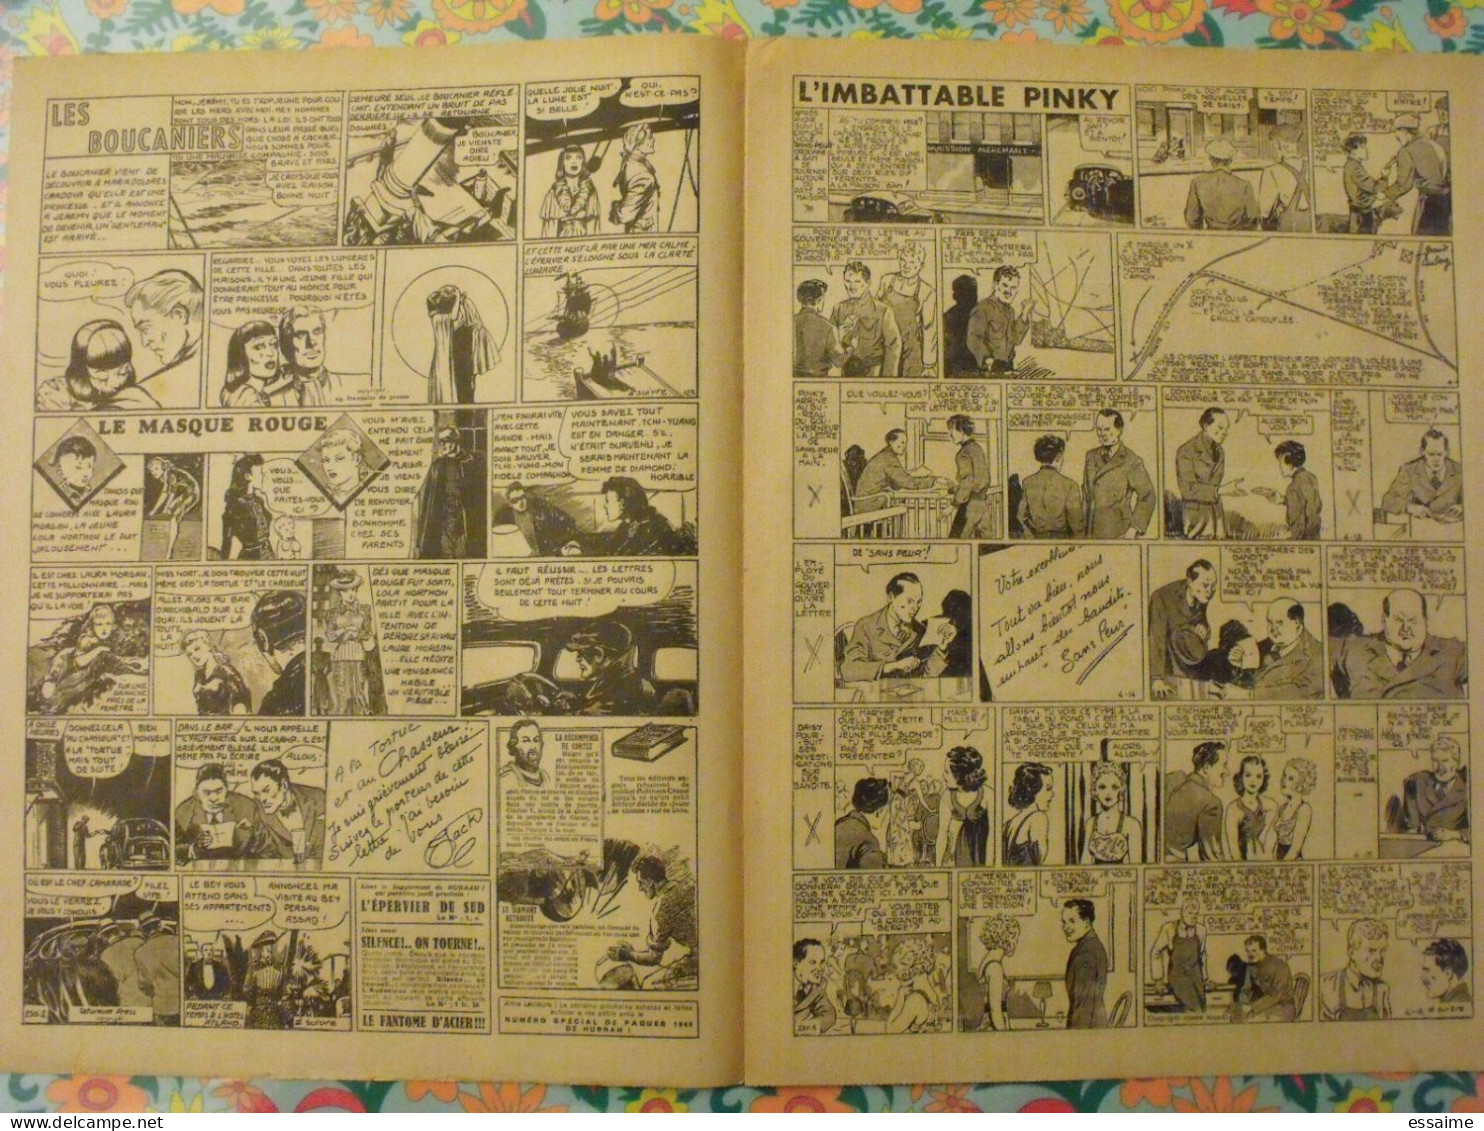 5 n° de Hurrah ! de 1940. Brick Bradford, Tarzan, le roi de la police montée, gordon. A redécouvrir